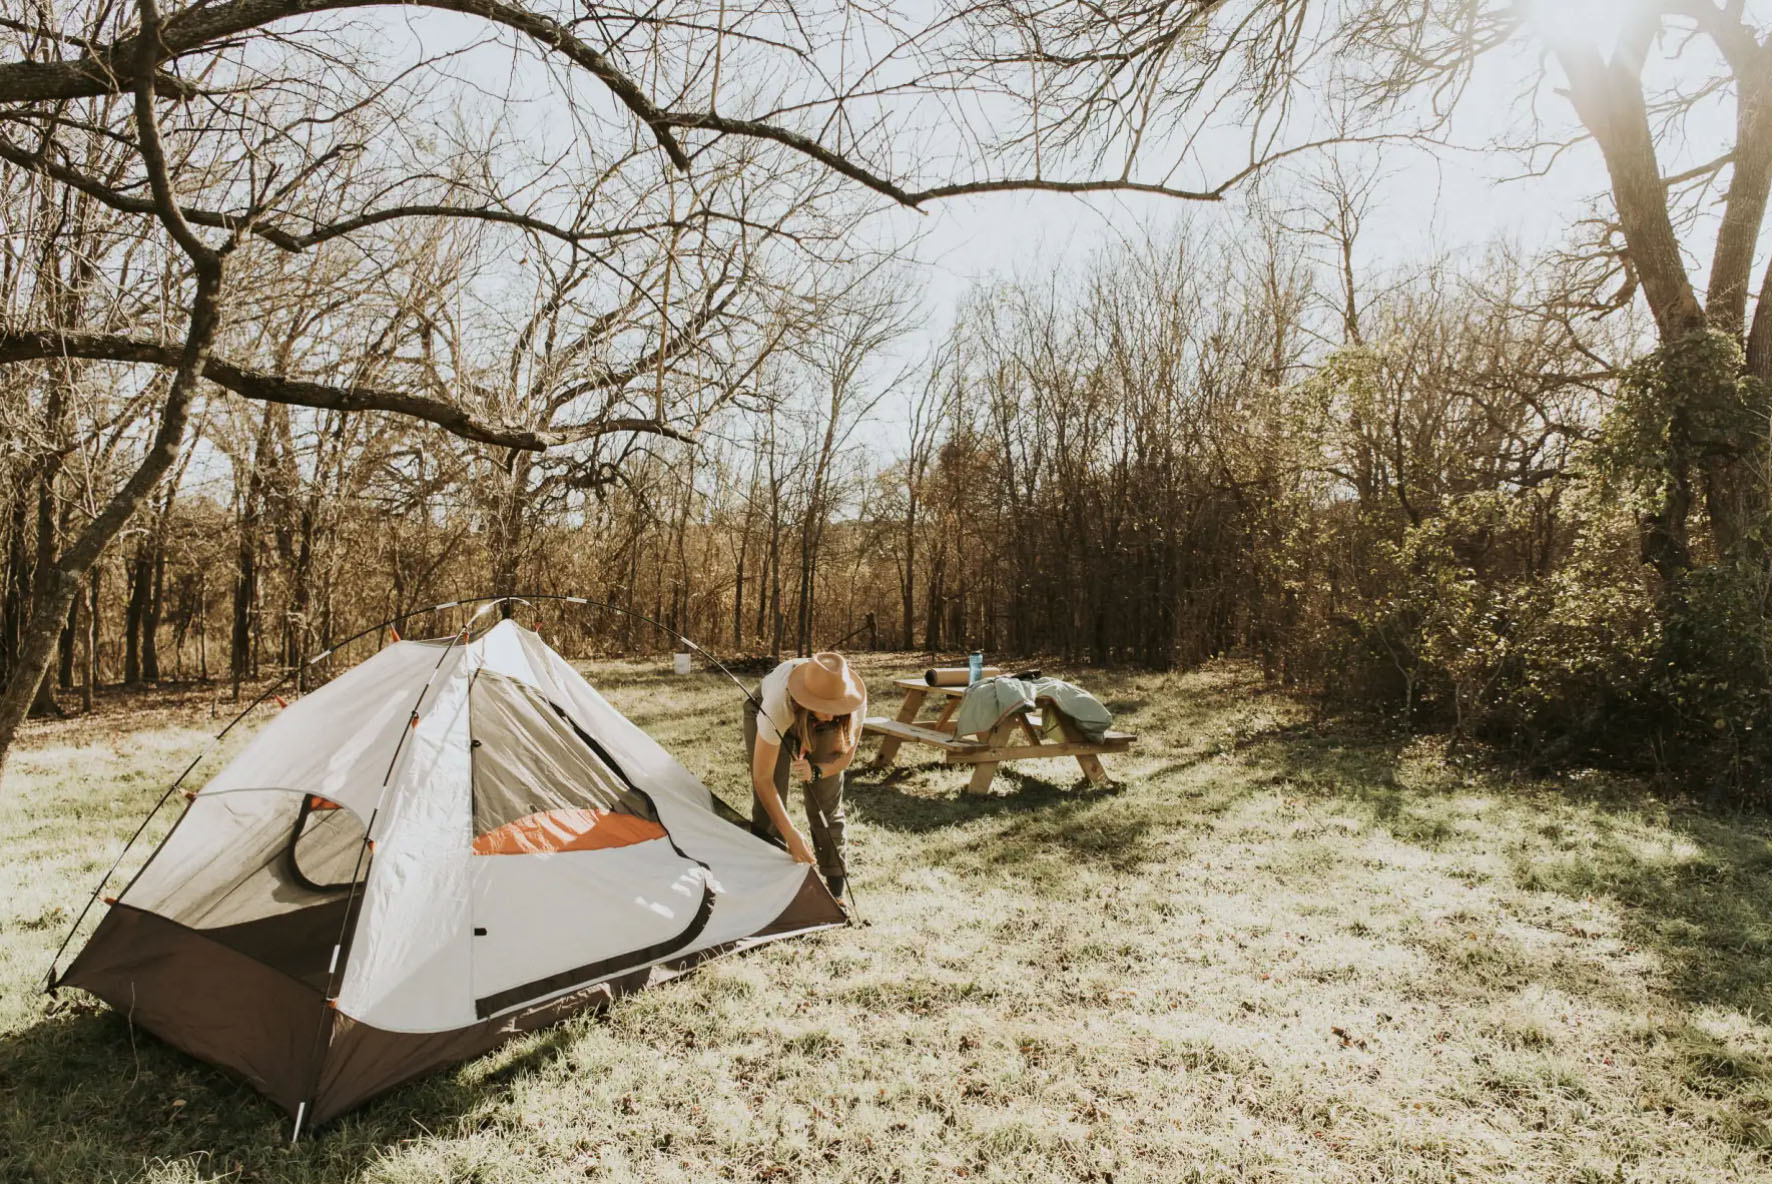 Richardson Creek camping in Texas s vicino alla libera